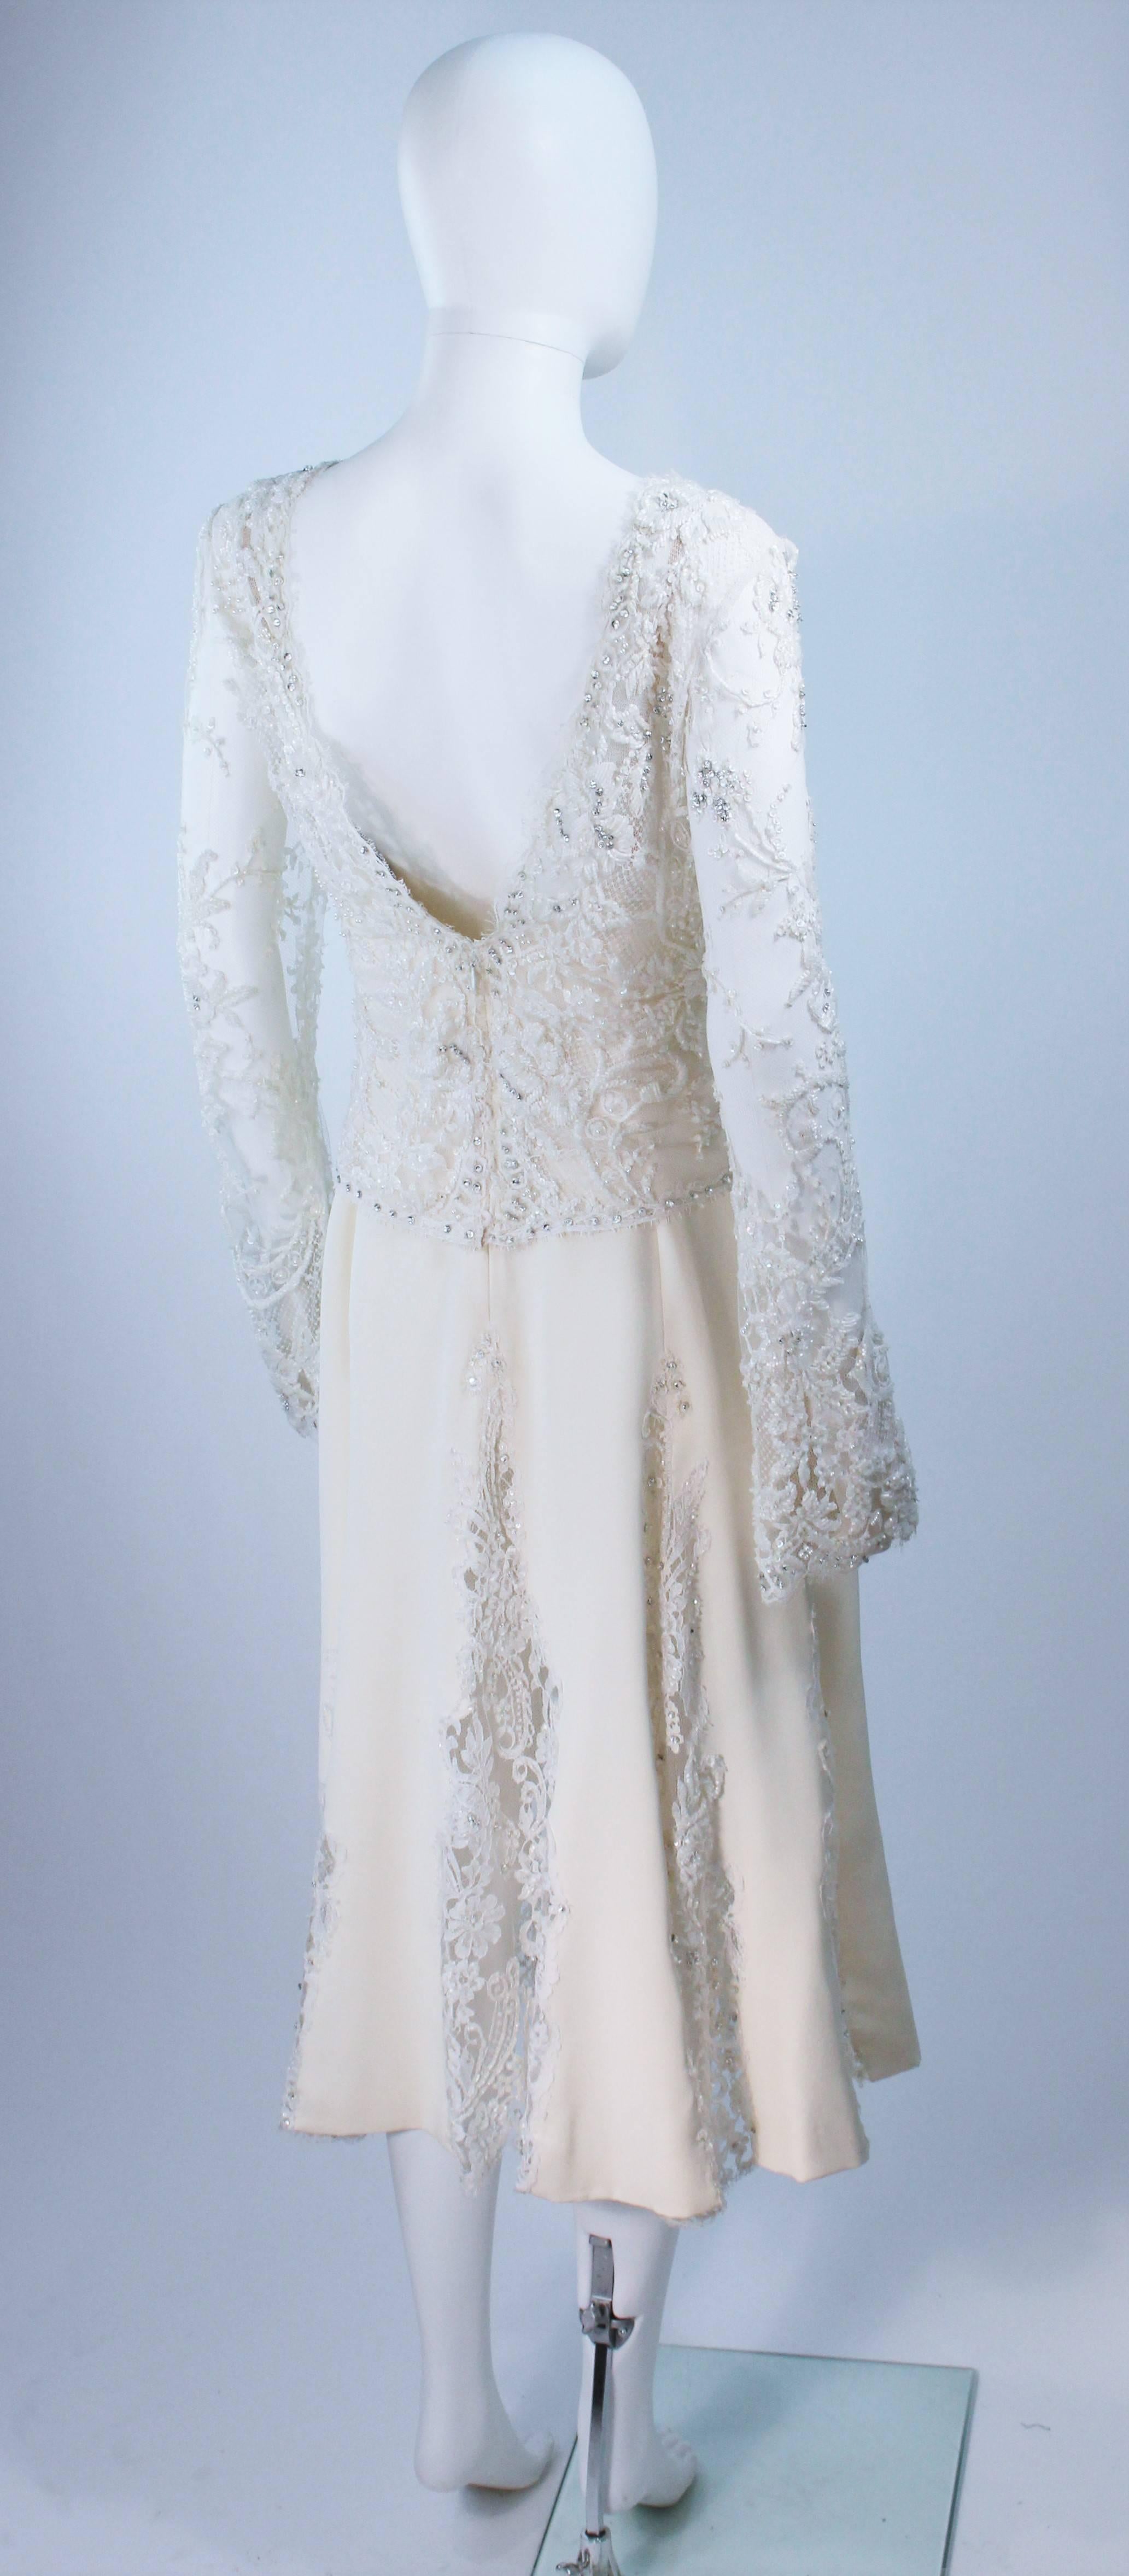 FE ZANDI White Lace Silk Embellished Dress Size 6 For Sale 2